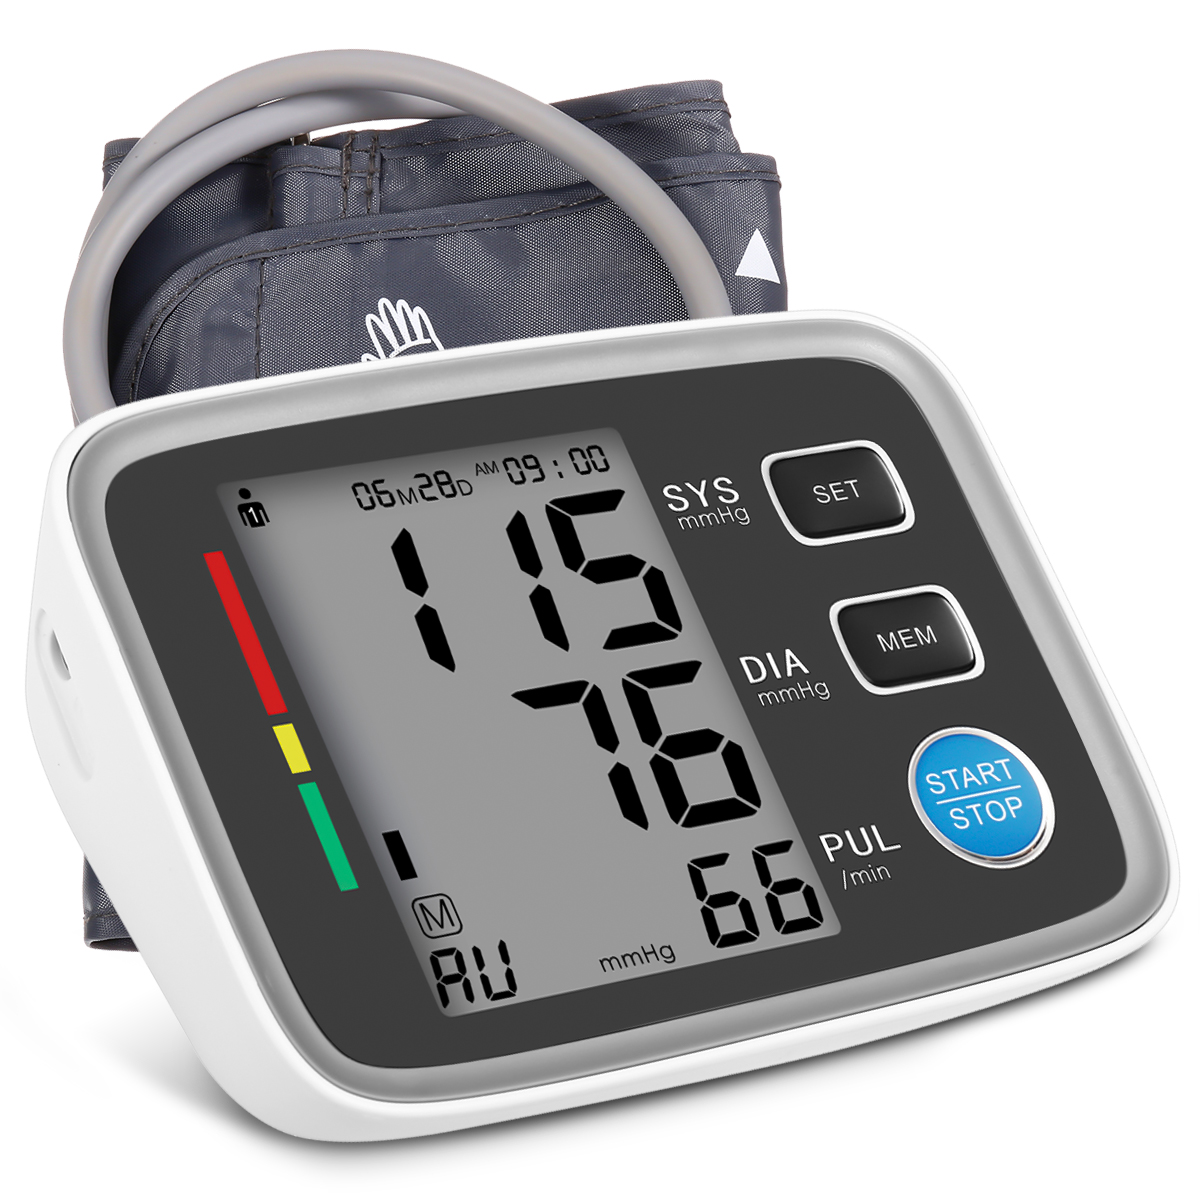 

Automatic Digital Upper Arm Blood Pressure Monitor Pulse Rate Irregular Heartbeat Detector Cuff FDA LCD Display